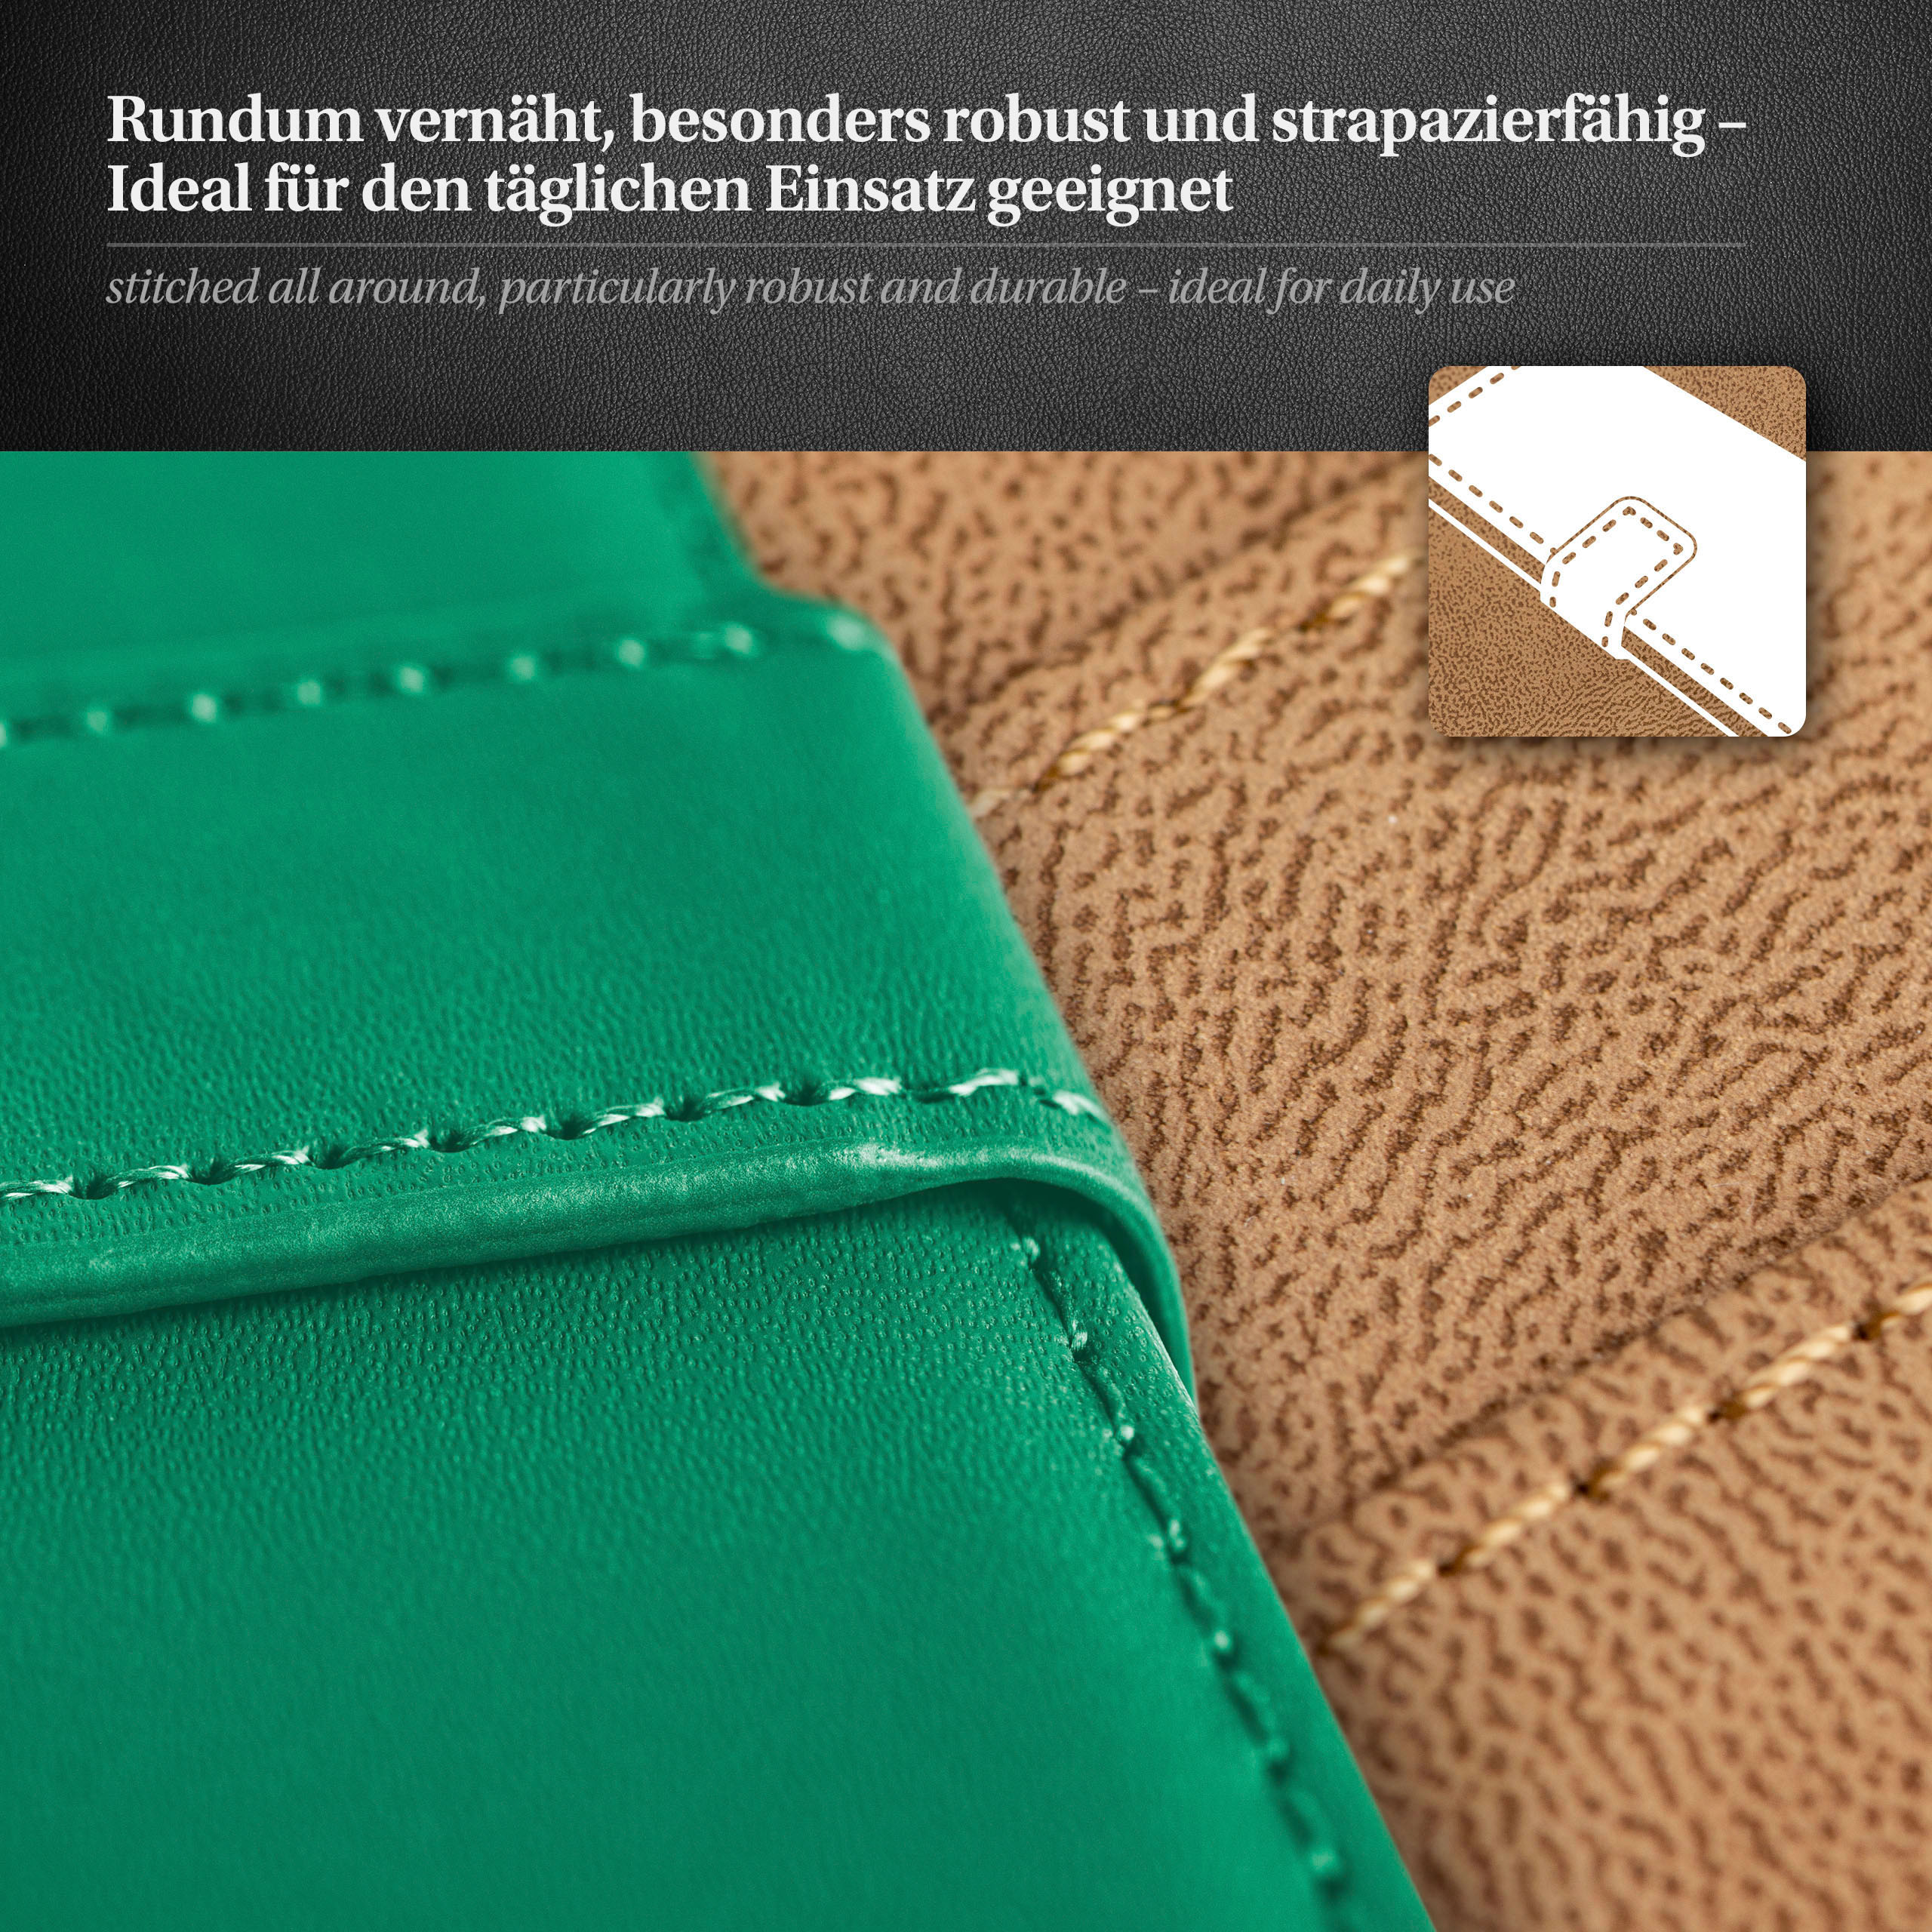 S5 Neo, / Bookcover, Emerald-Green Galaxy Samsung, Book S5 Case, MOEX